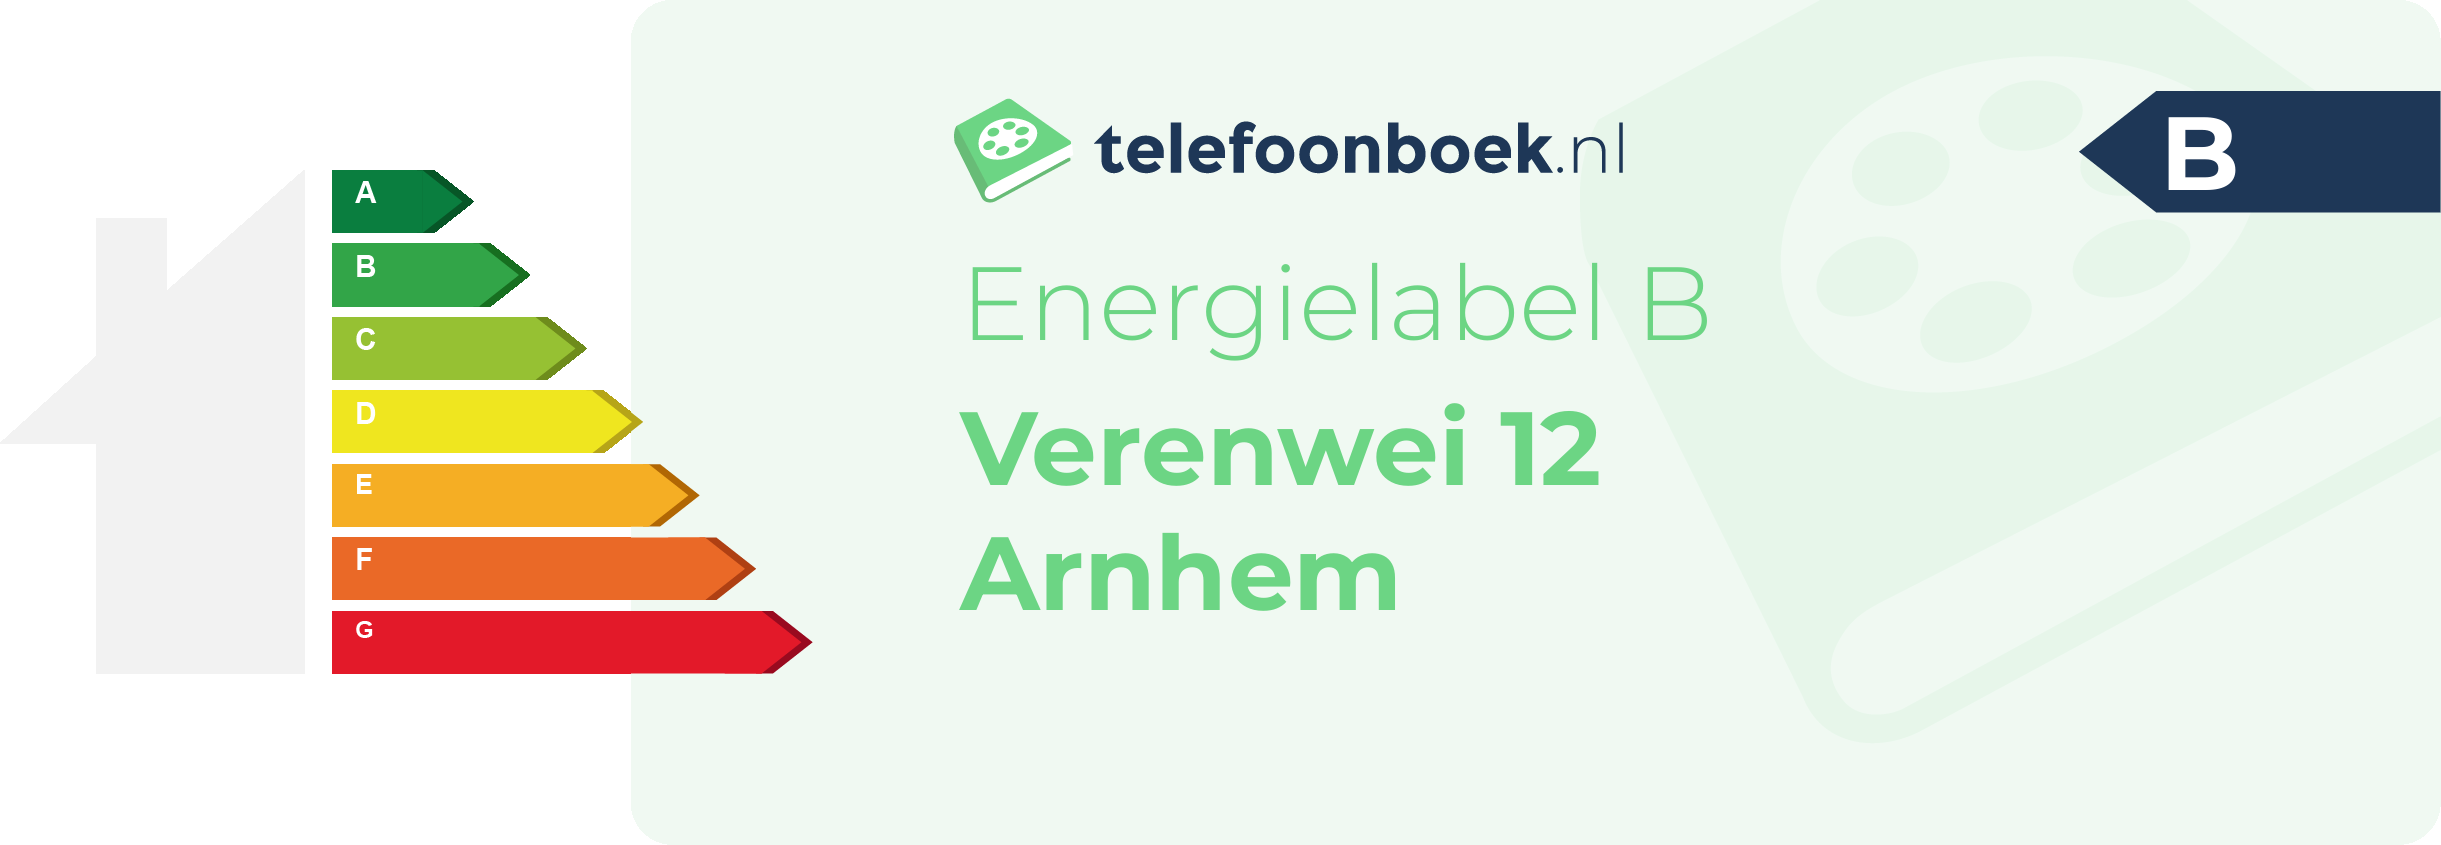 Energielabel Verenwei 12 Arnhem